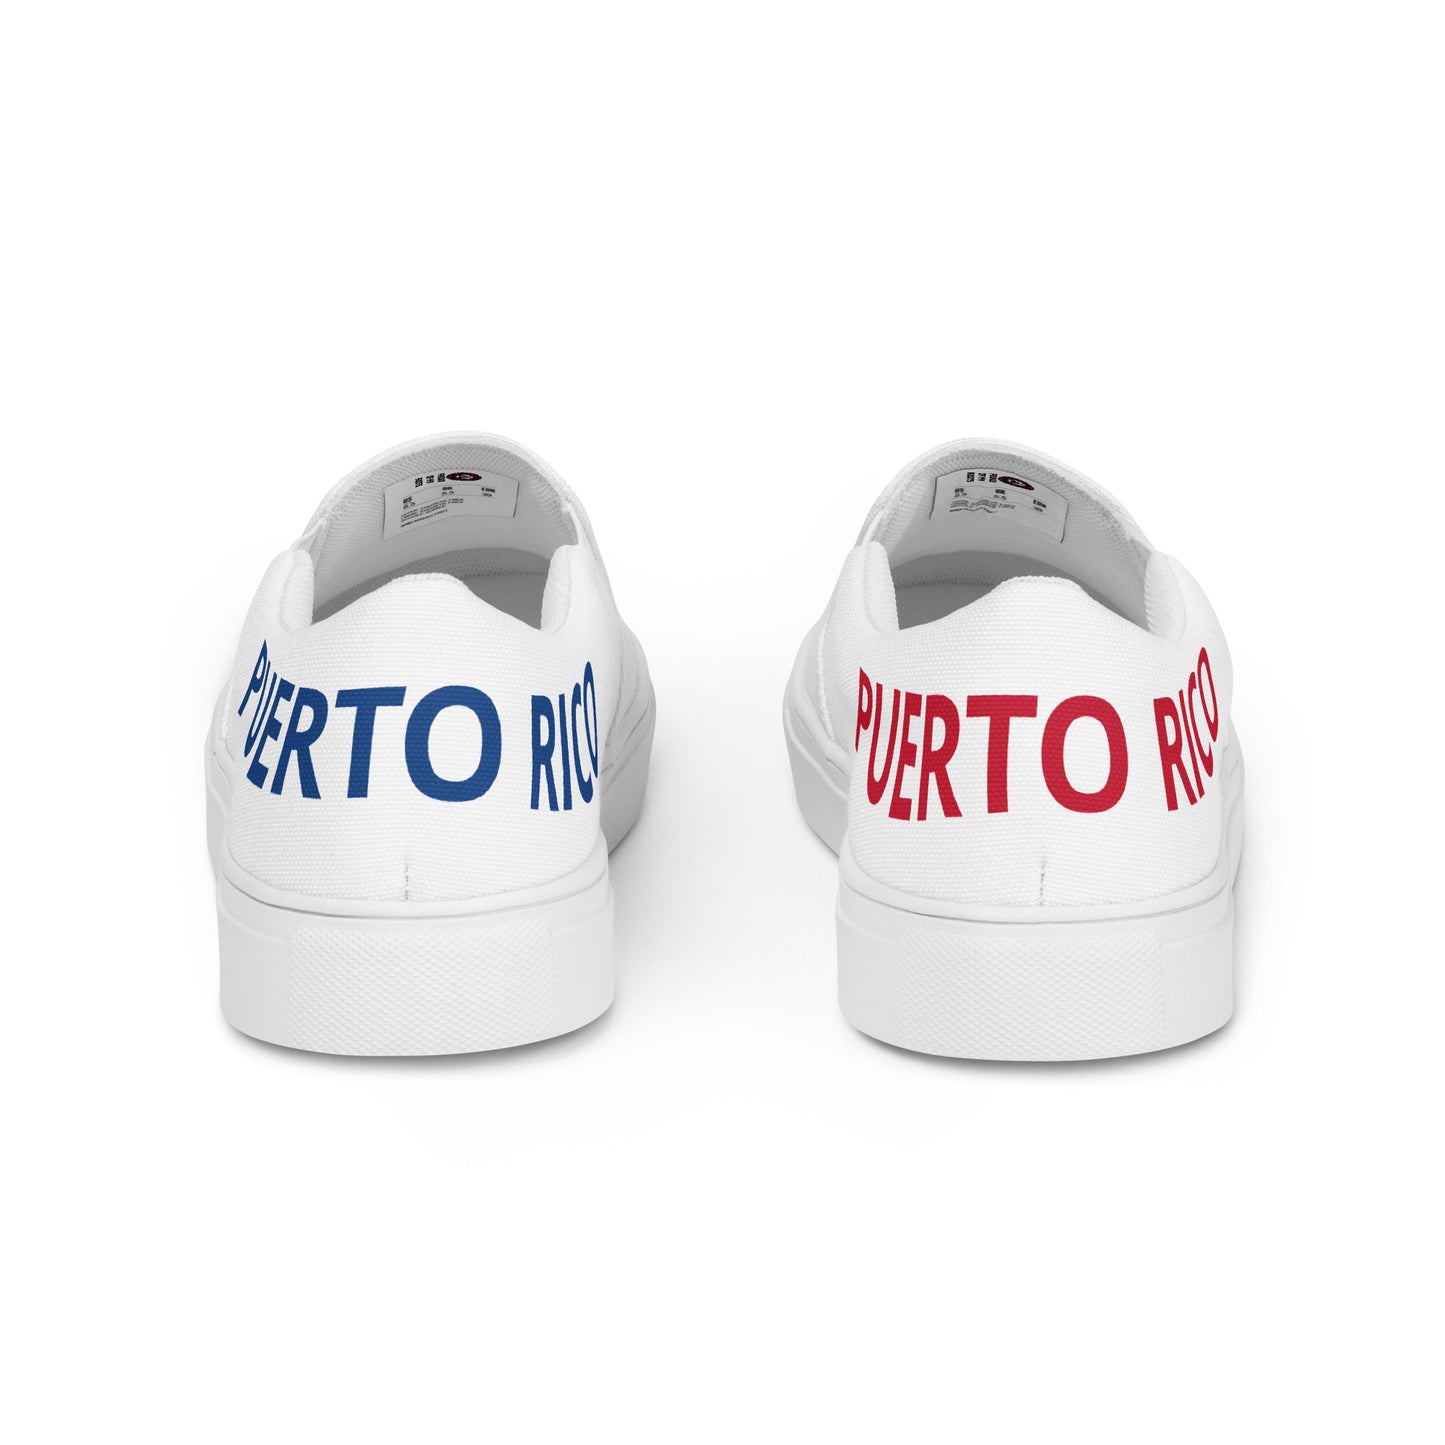 Puerto Rico - Women - White - Slip-on shoes